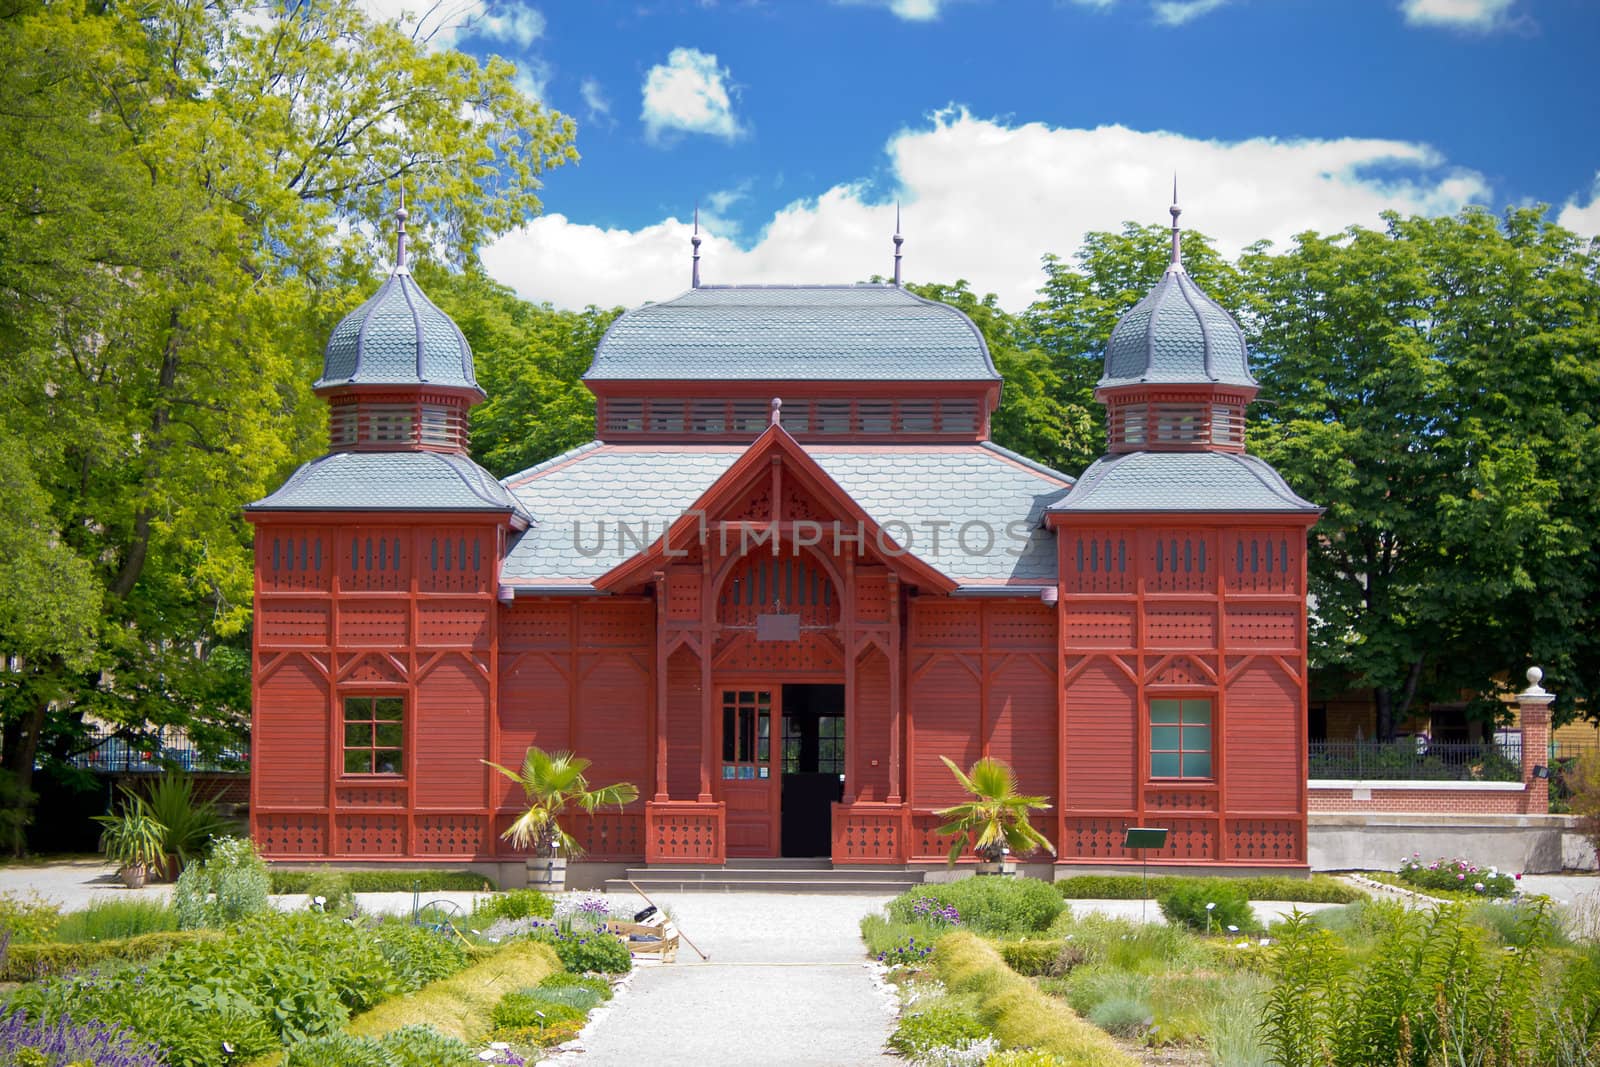 Croatian capital of Zagreb botanical garden red wooden public pavilion